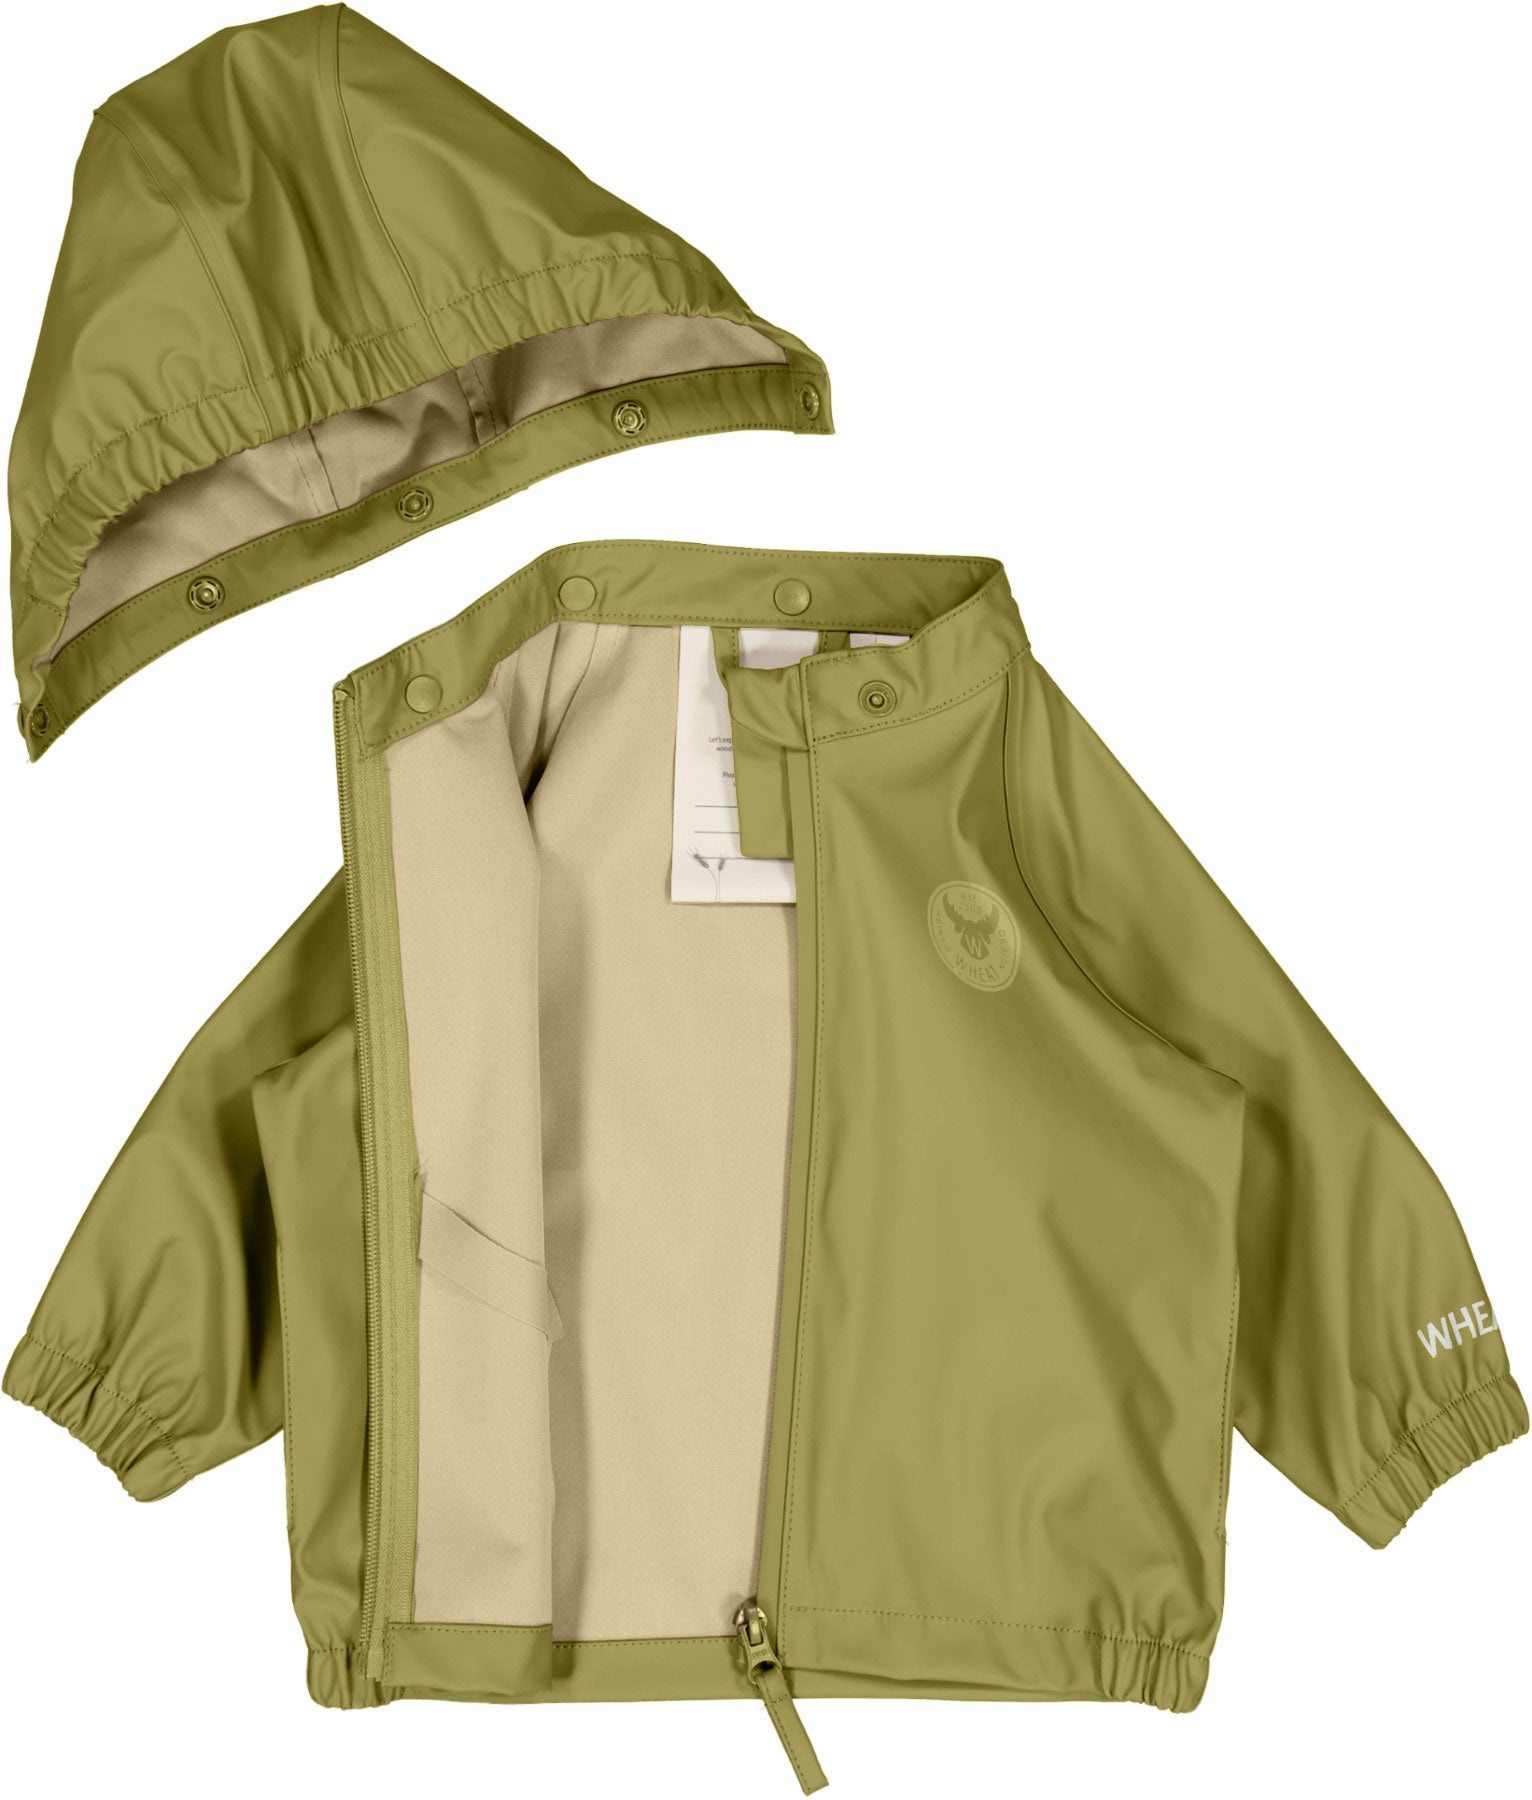 Wheat - Baby Rainwear Charlie - 4121 heather green